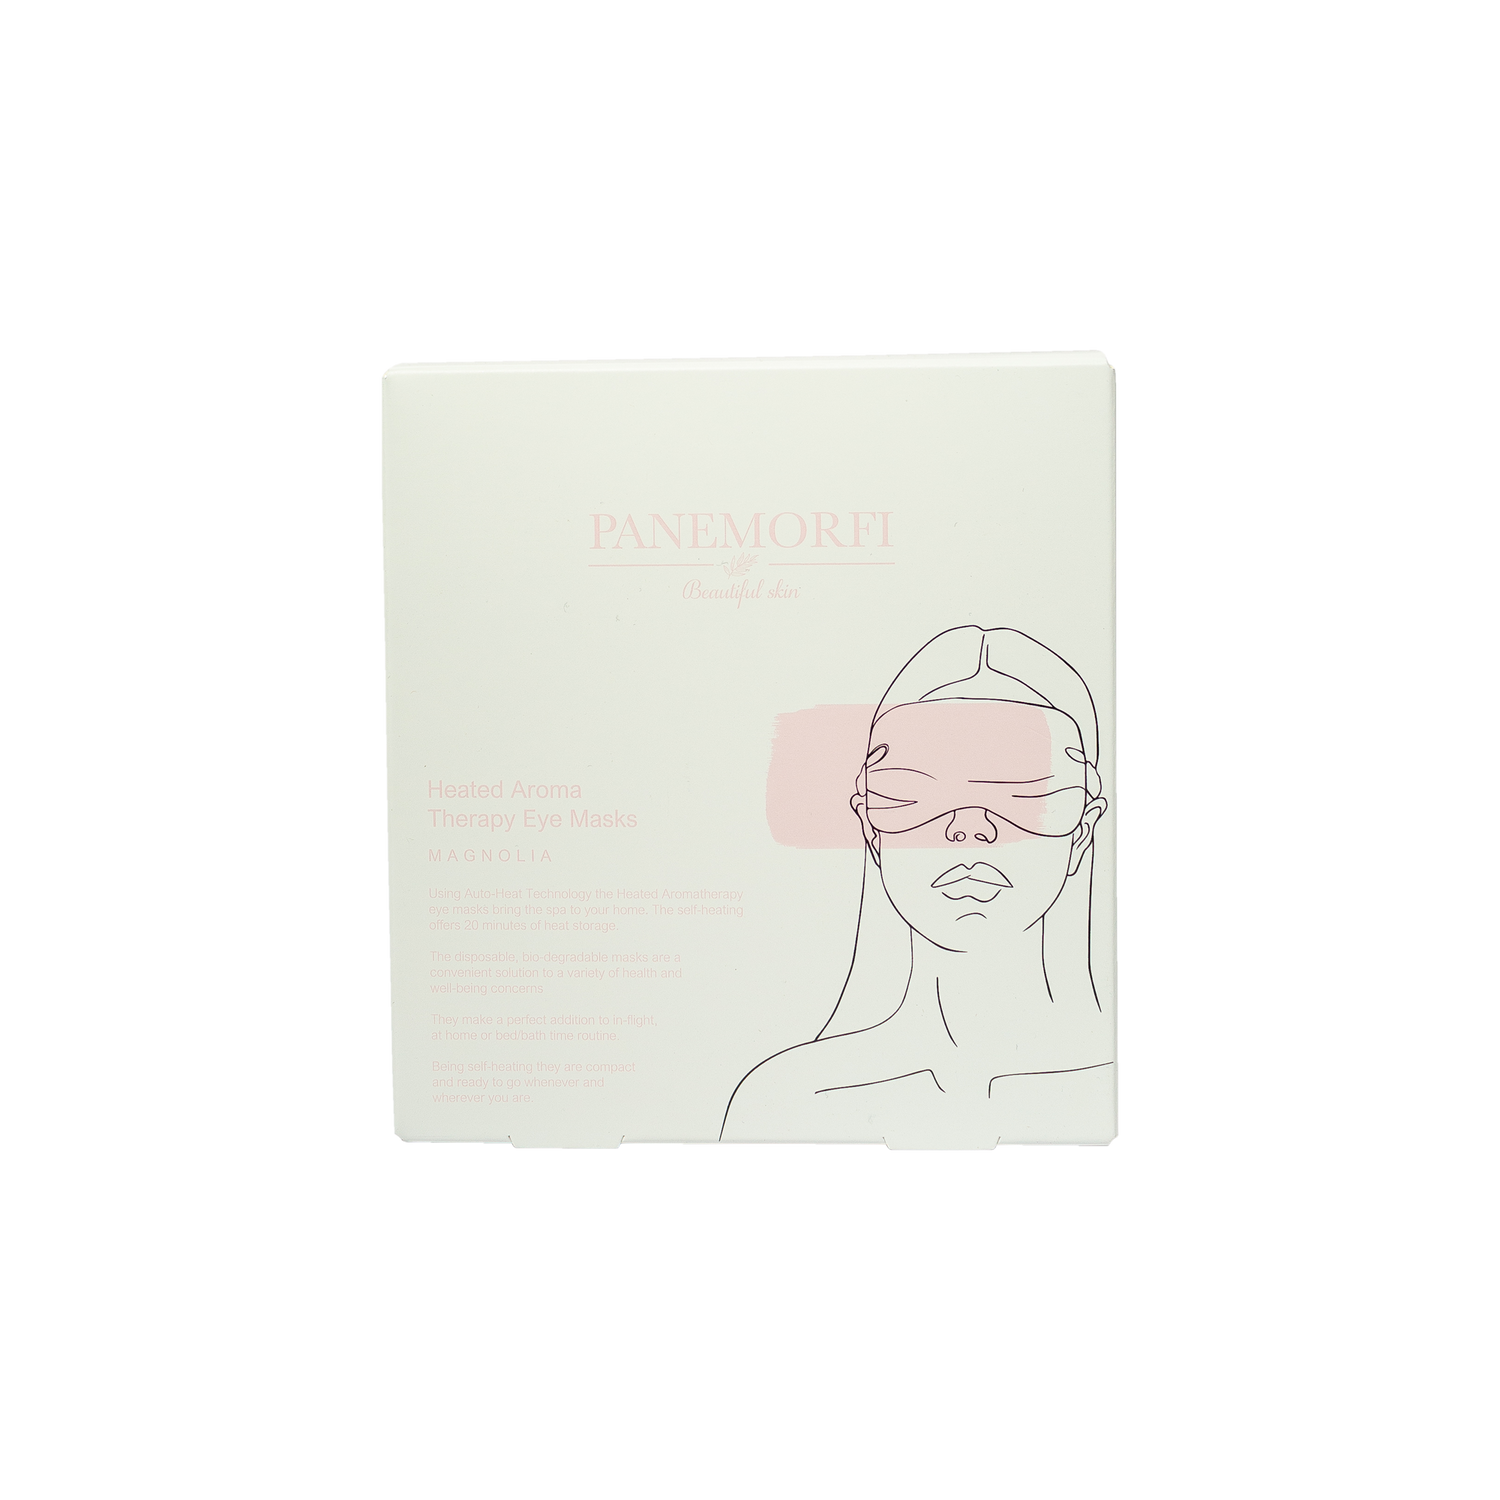 PANEMORFI - Magnolia Heated Aromatherapy Eye Masks